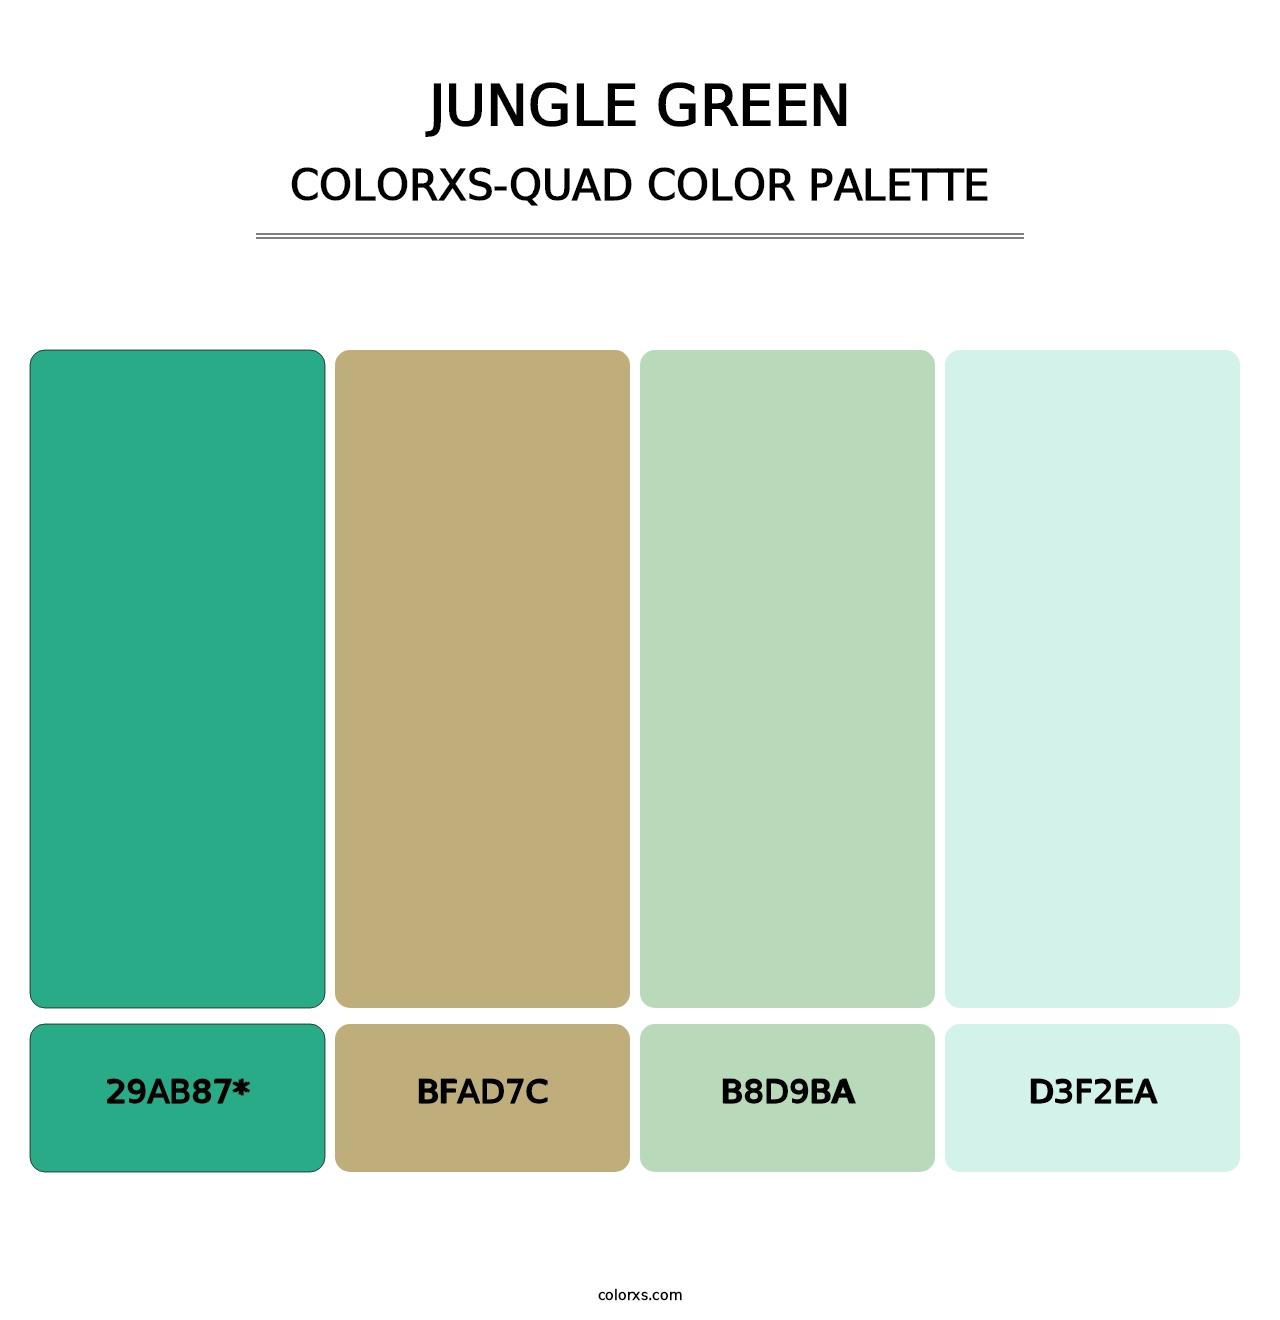 Jungle Green - Colorxs Quad Palette